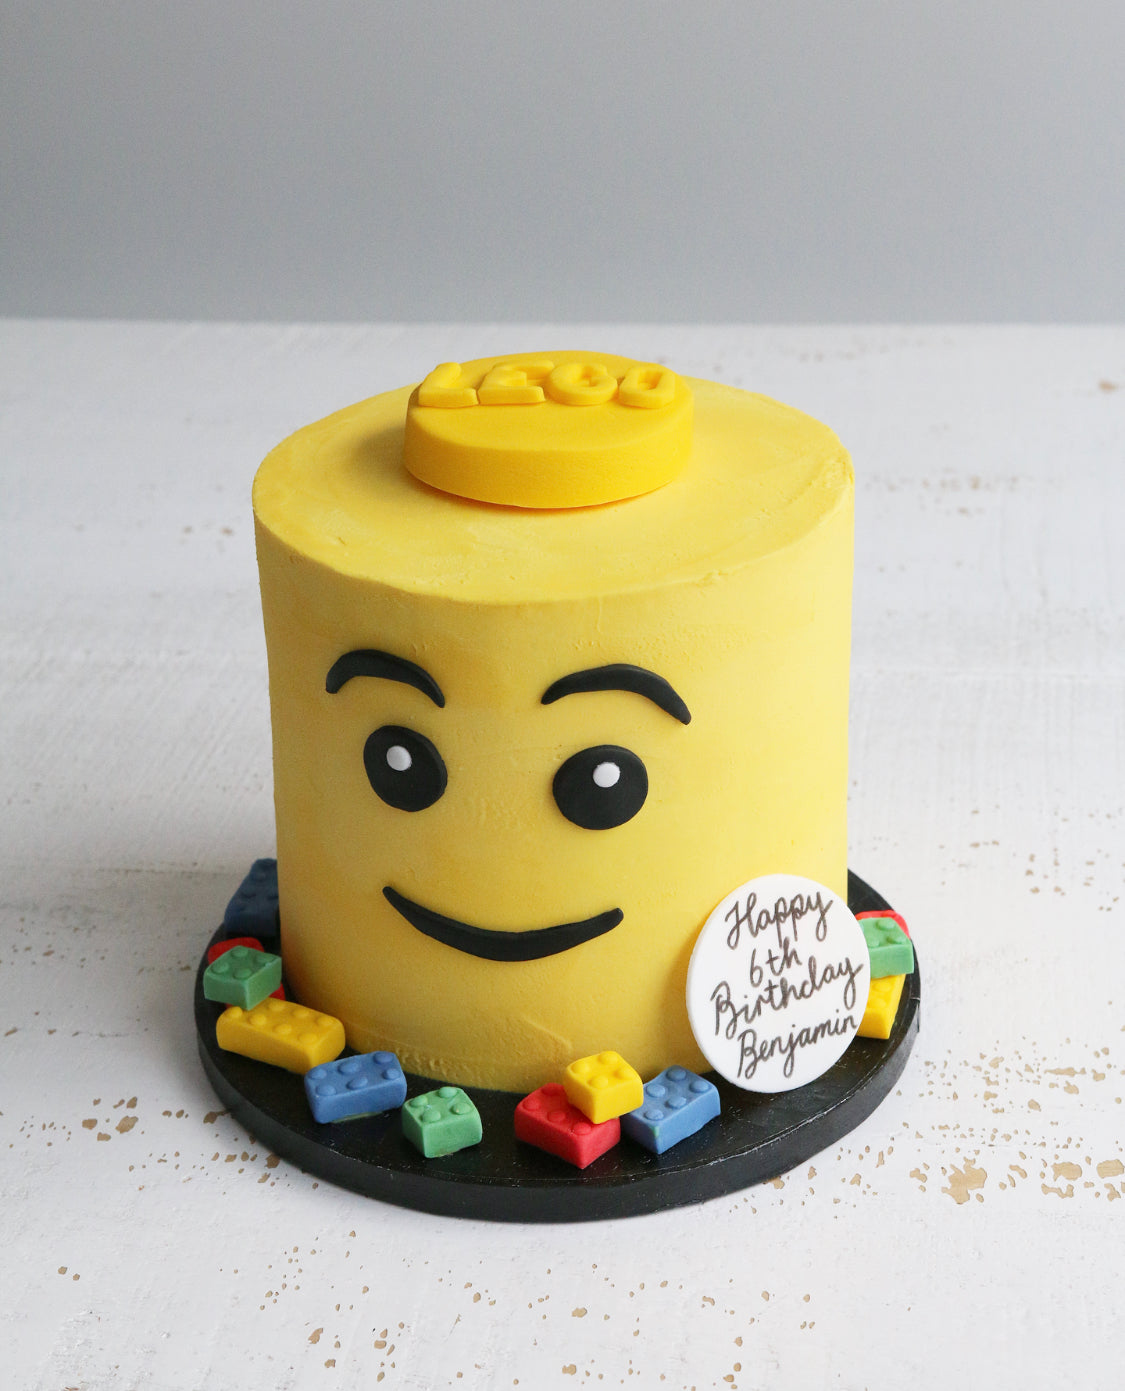 How to Make Lego Cake Pops - Cherished Bliss